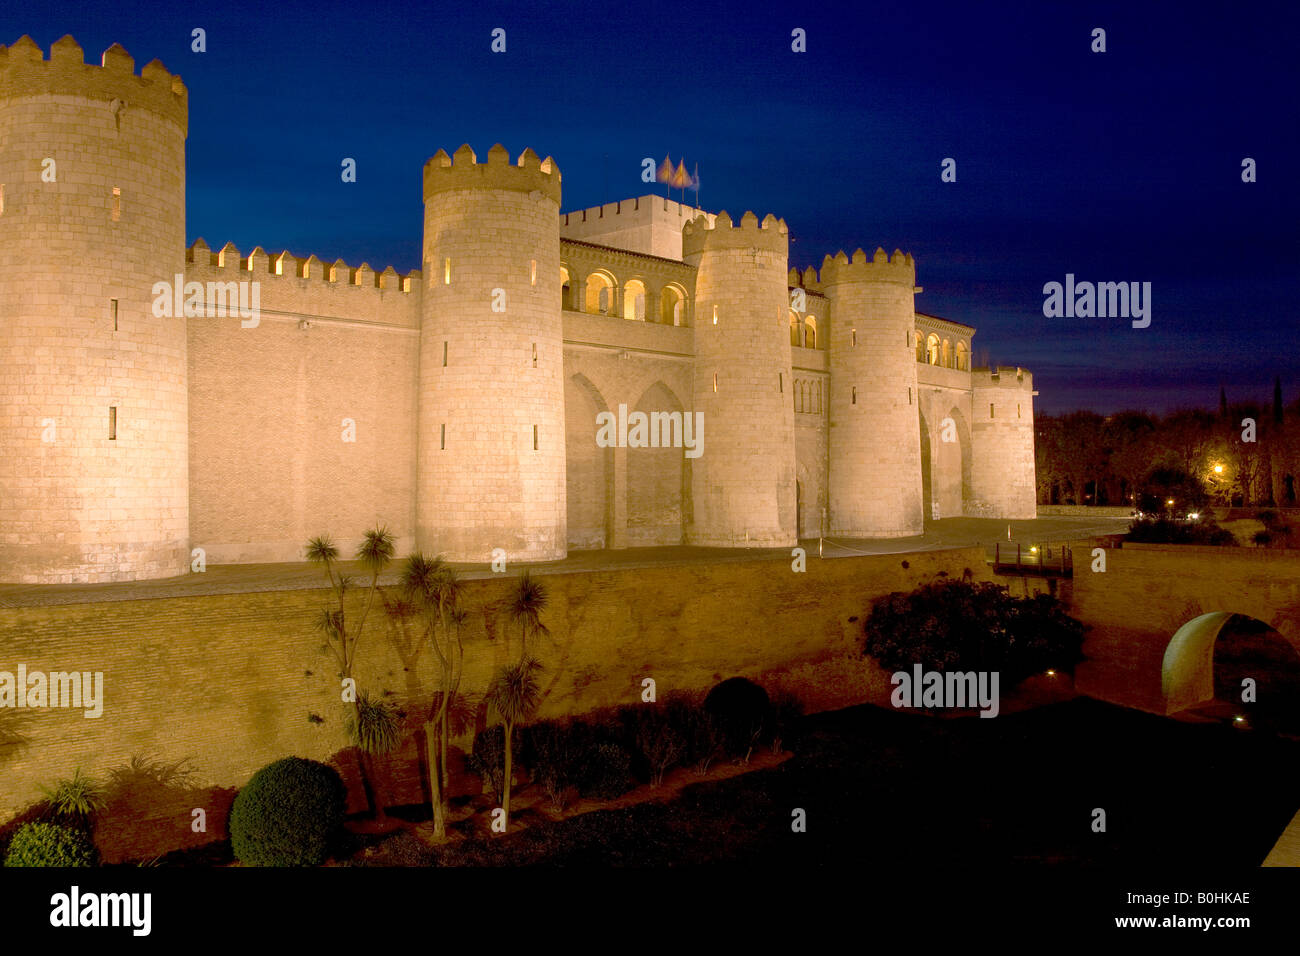 Palacio de Aljaferia palace illuminated at night under floodlights, flags flying over external wall and towers, Moorish archite Stock Photo